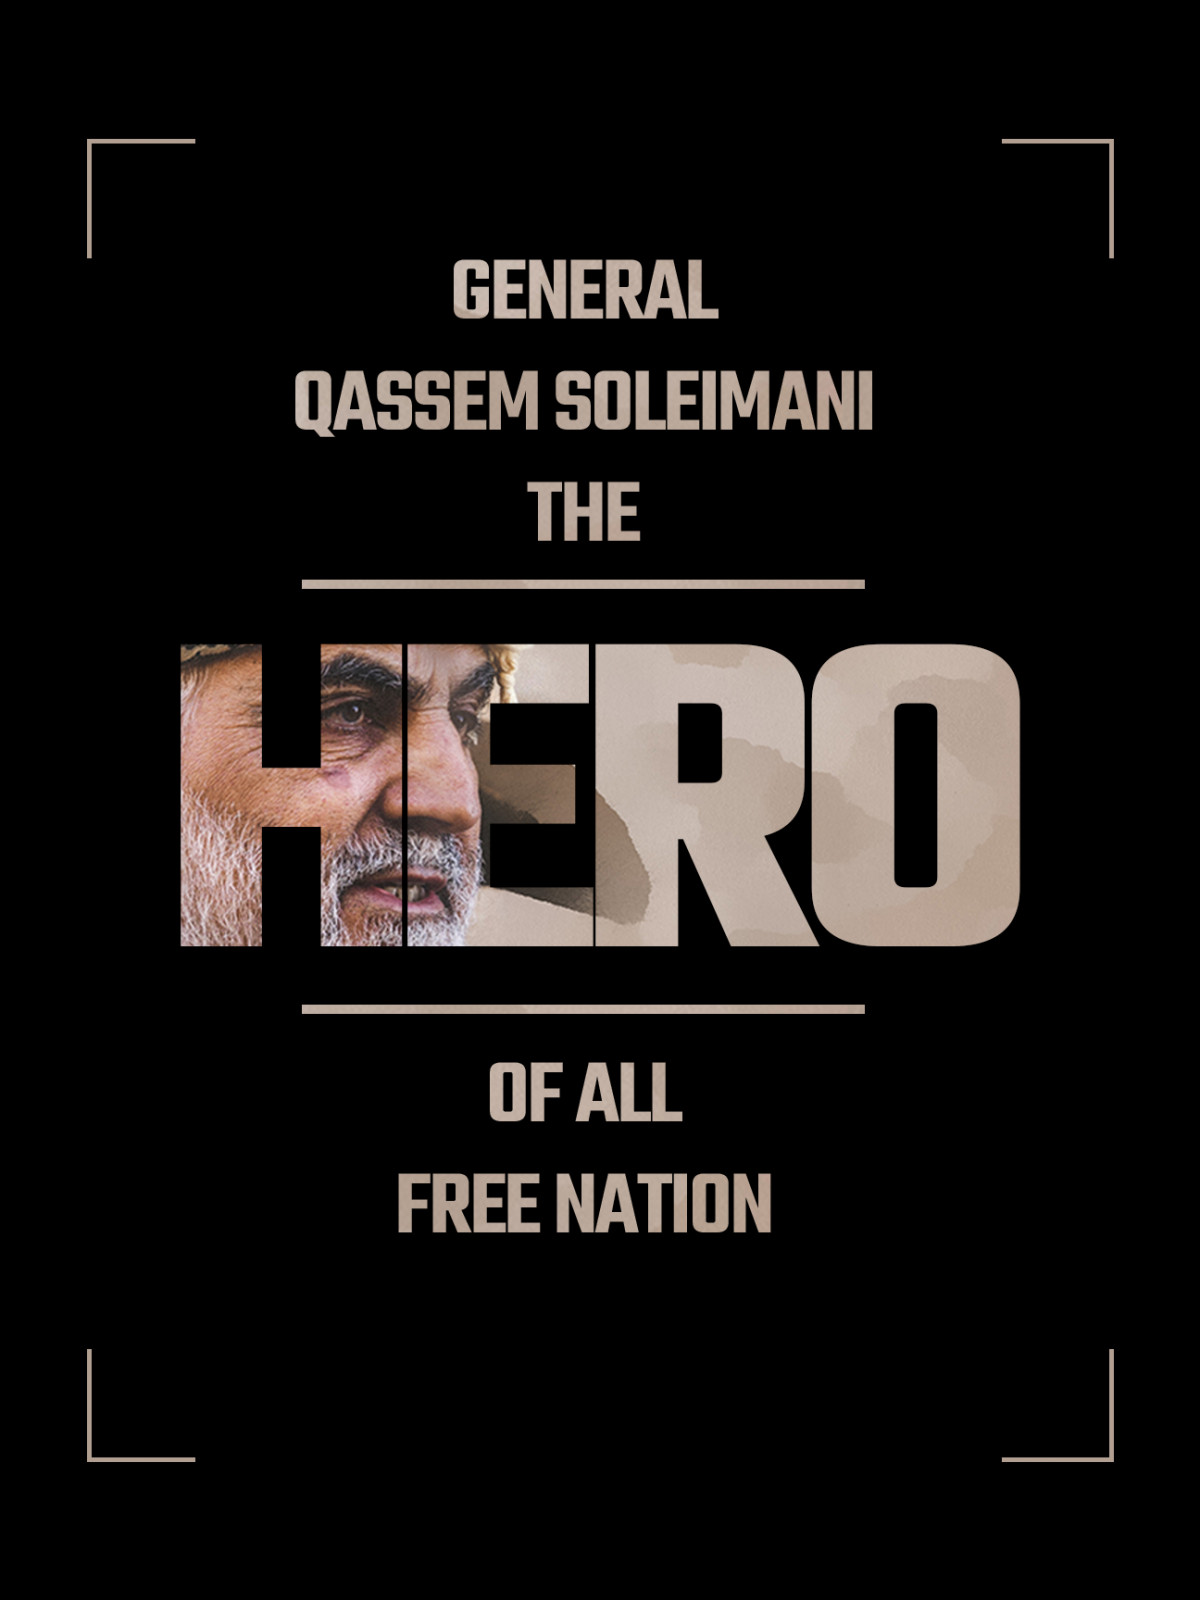 General Qassem Soleimani the hero of all free nation